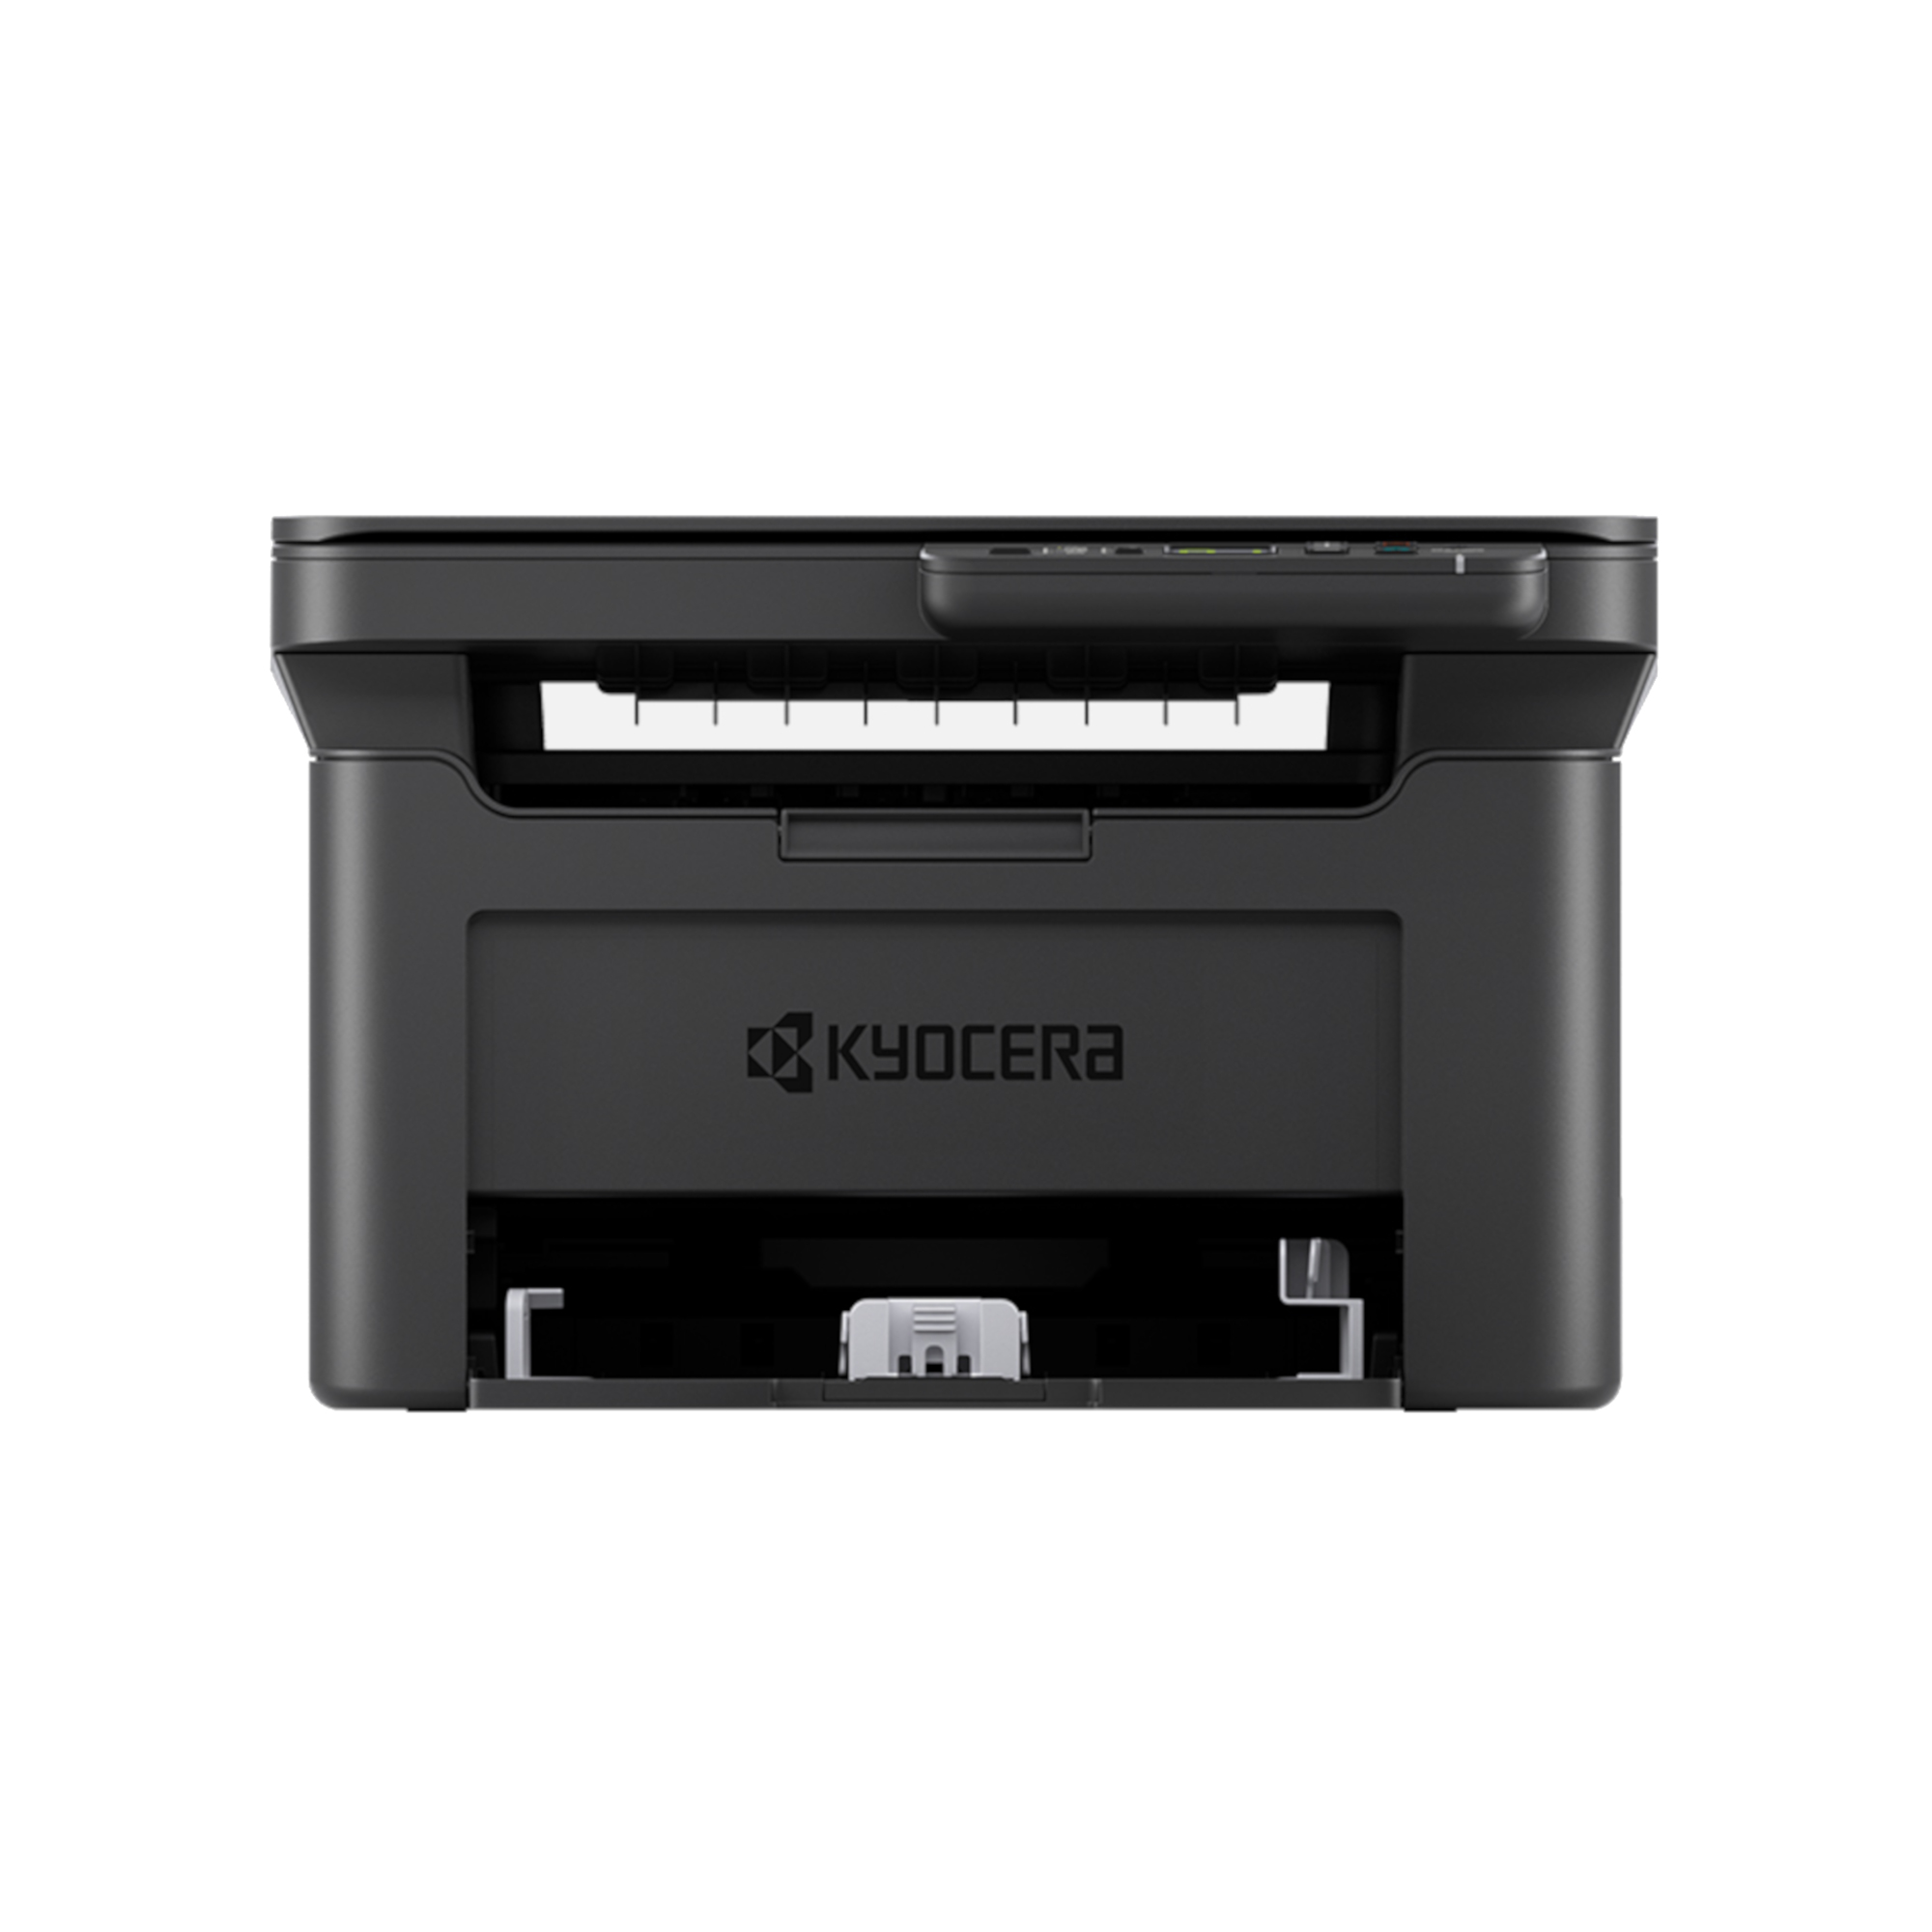 Impresora Escáner Láser Monocromática Kyocera 21 ppm Wi-Fi - PcService